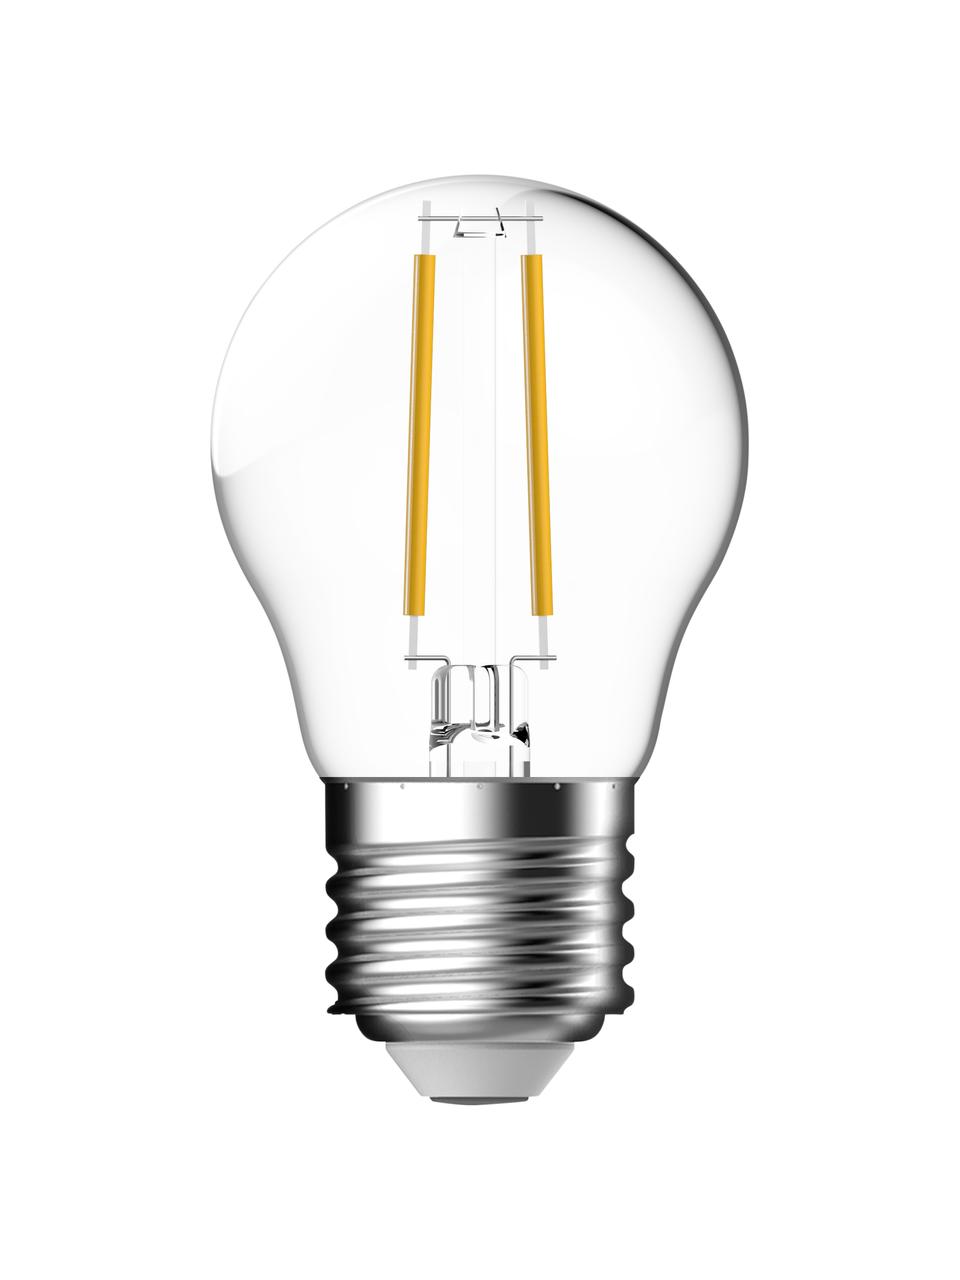 Lampadina E27, dimmerabile, bianco caldo, 2 pz, Lampadina: vetro, Base lampadina: alluminio, Trasparente, Ø 5 x Alt. 8 cm, 2 pz